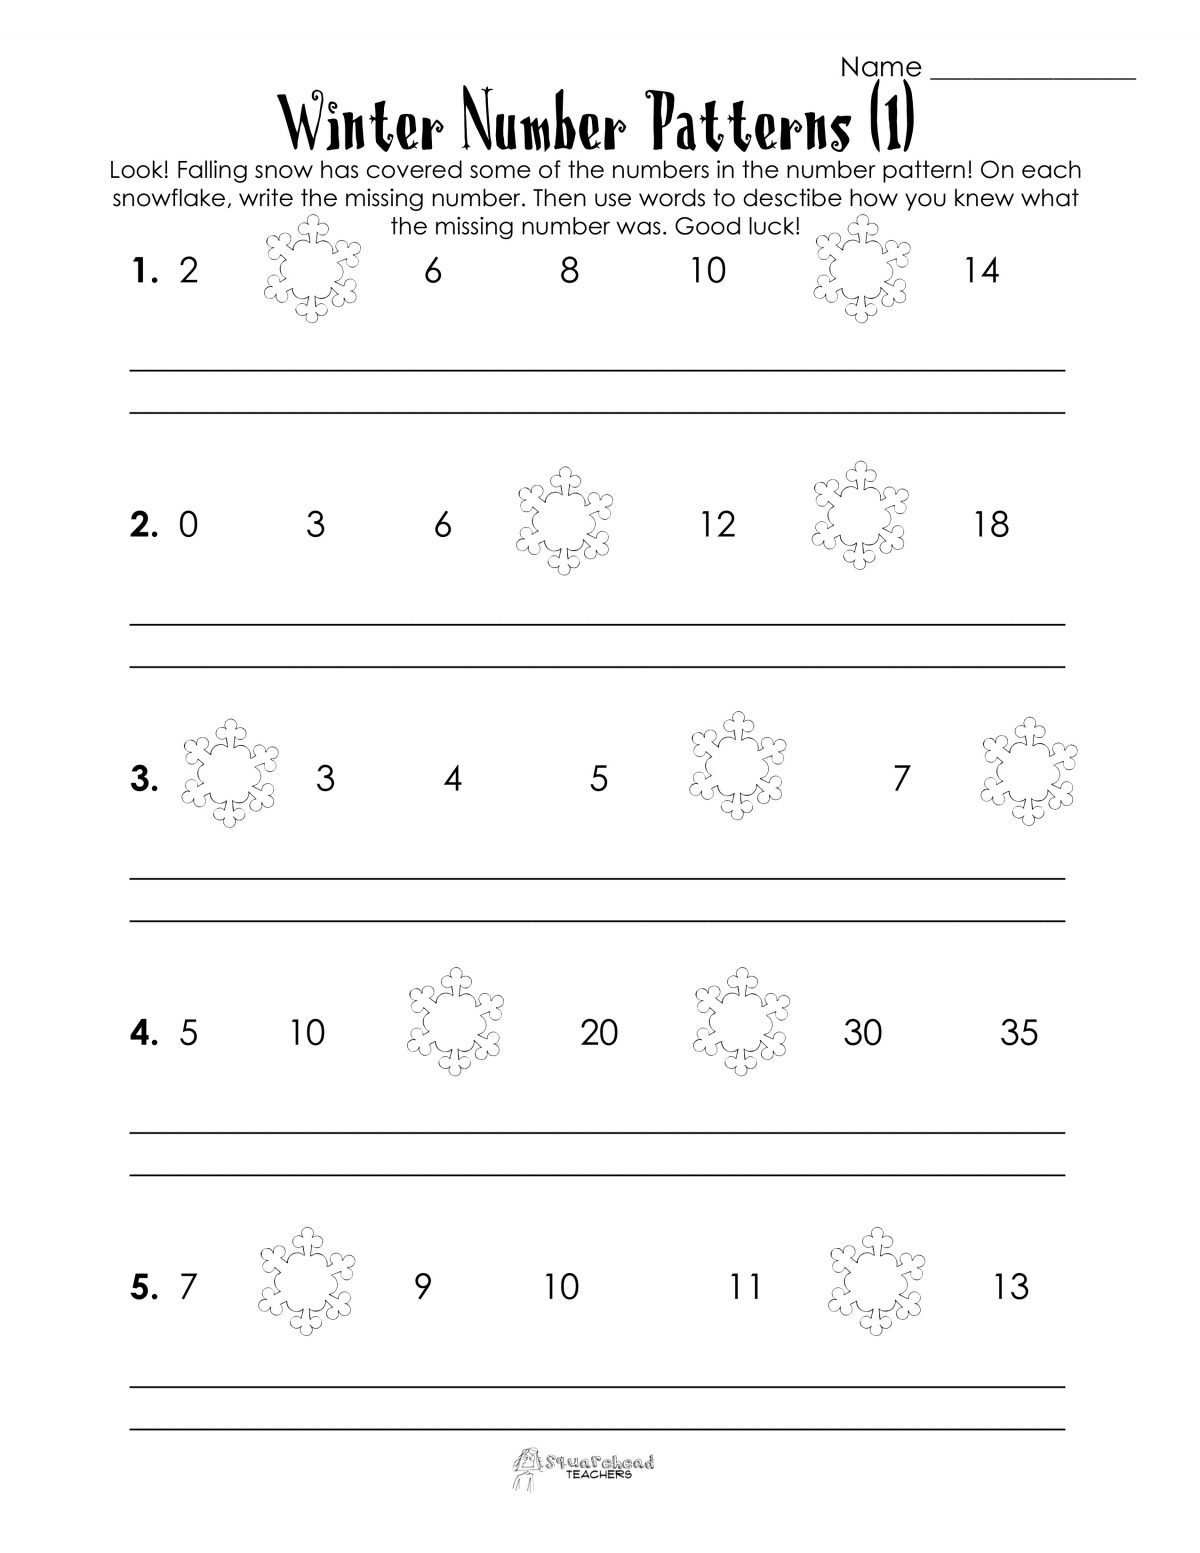 sequence-number-patterns-worksheets-printableducation